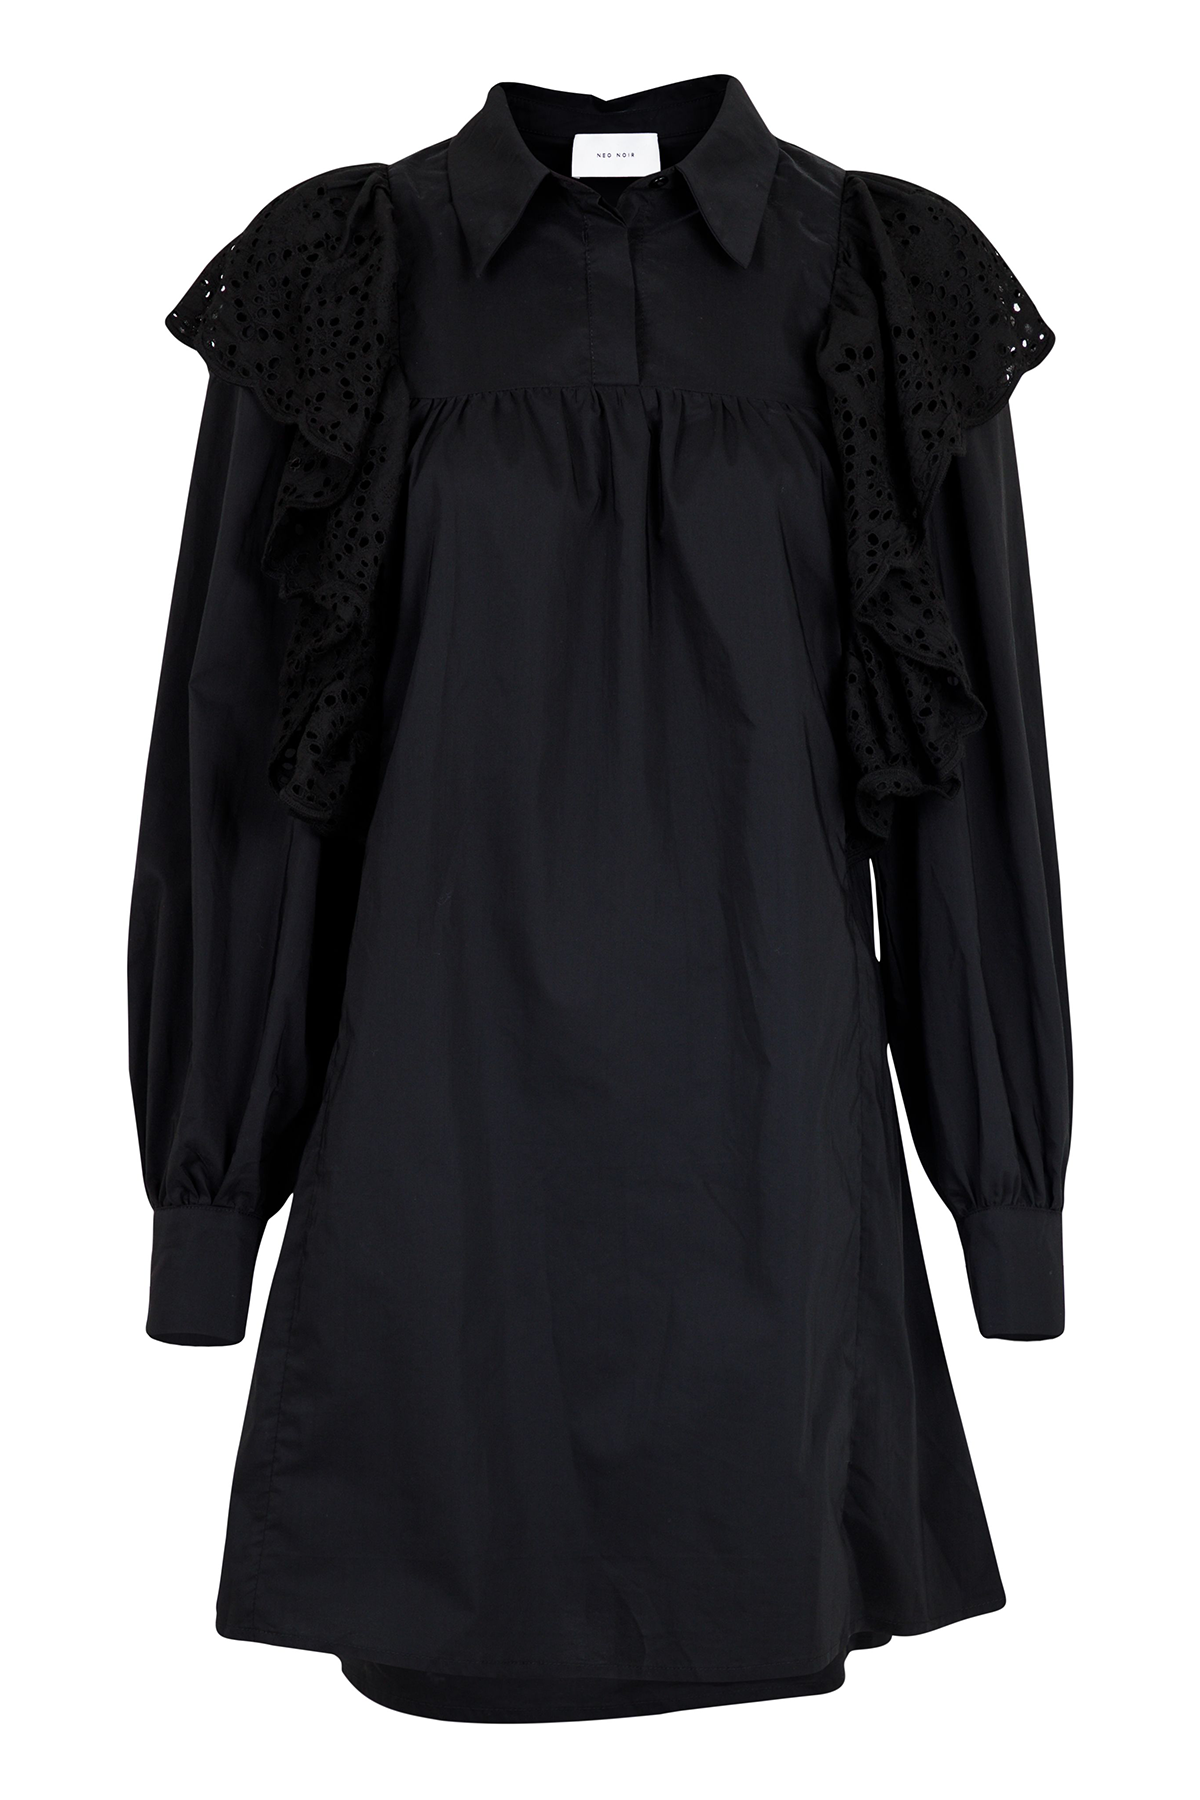 NEO NOIR DANIELLE DRESS 154193 100 (Black, XS)